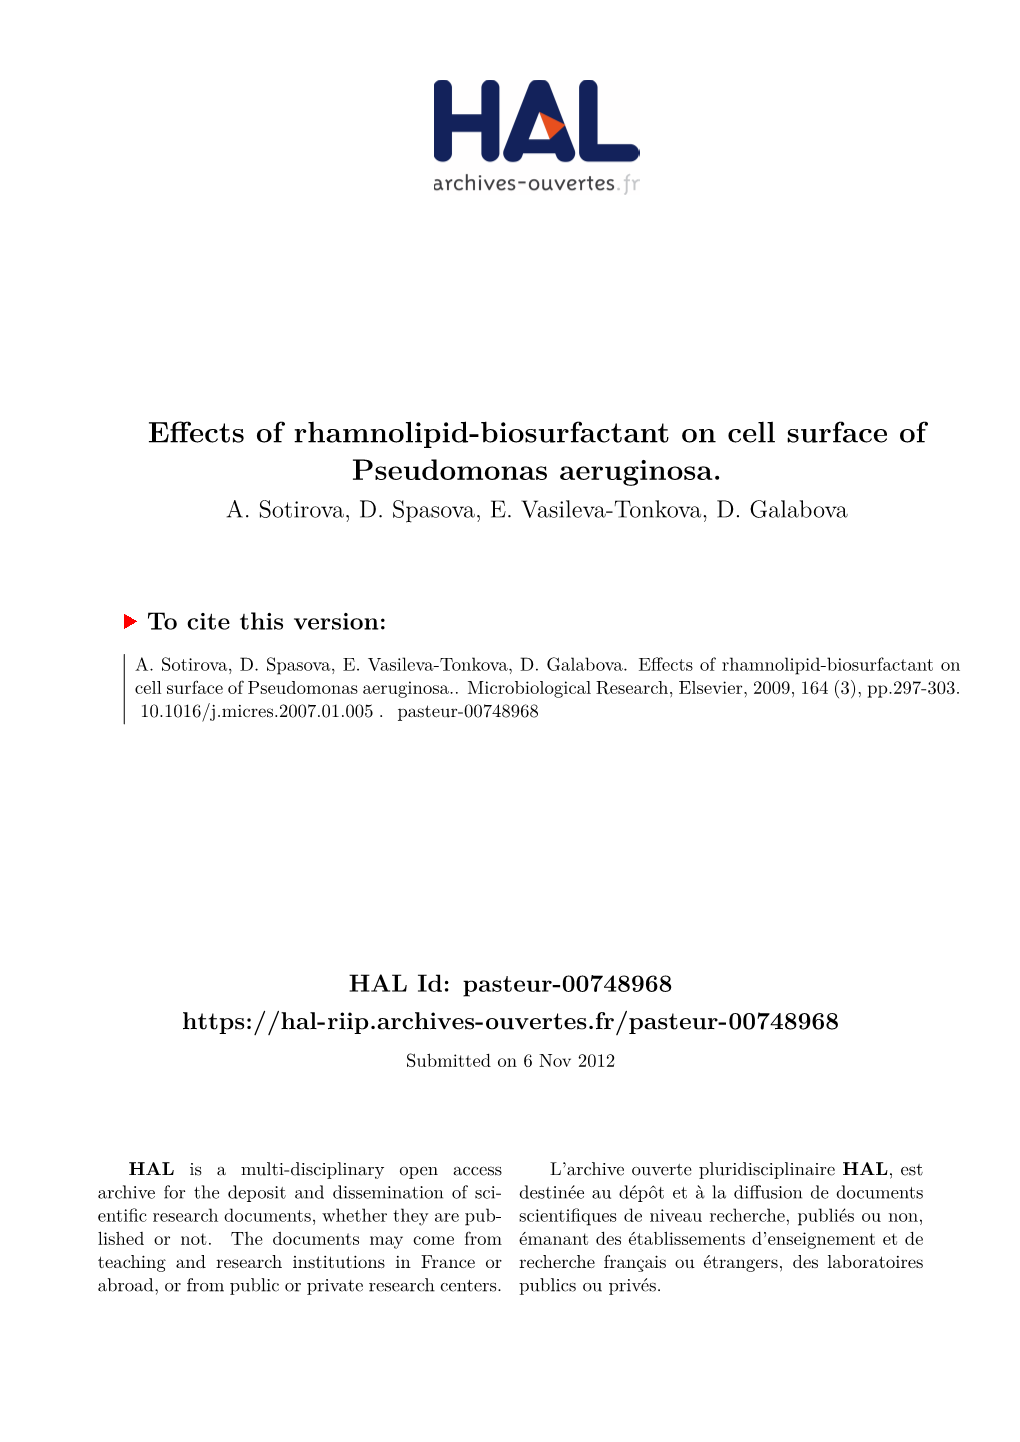 Effects of Rhamnolipid-Biosurfactant on Cell Surface of Pseudomonas Aeruginosa